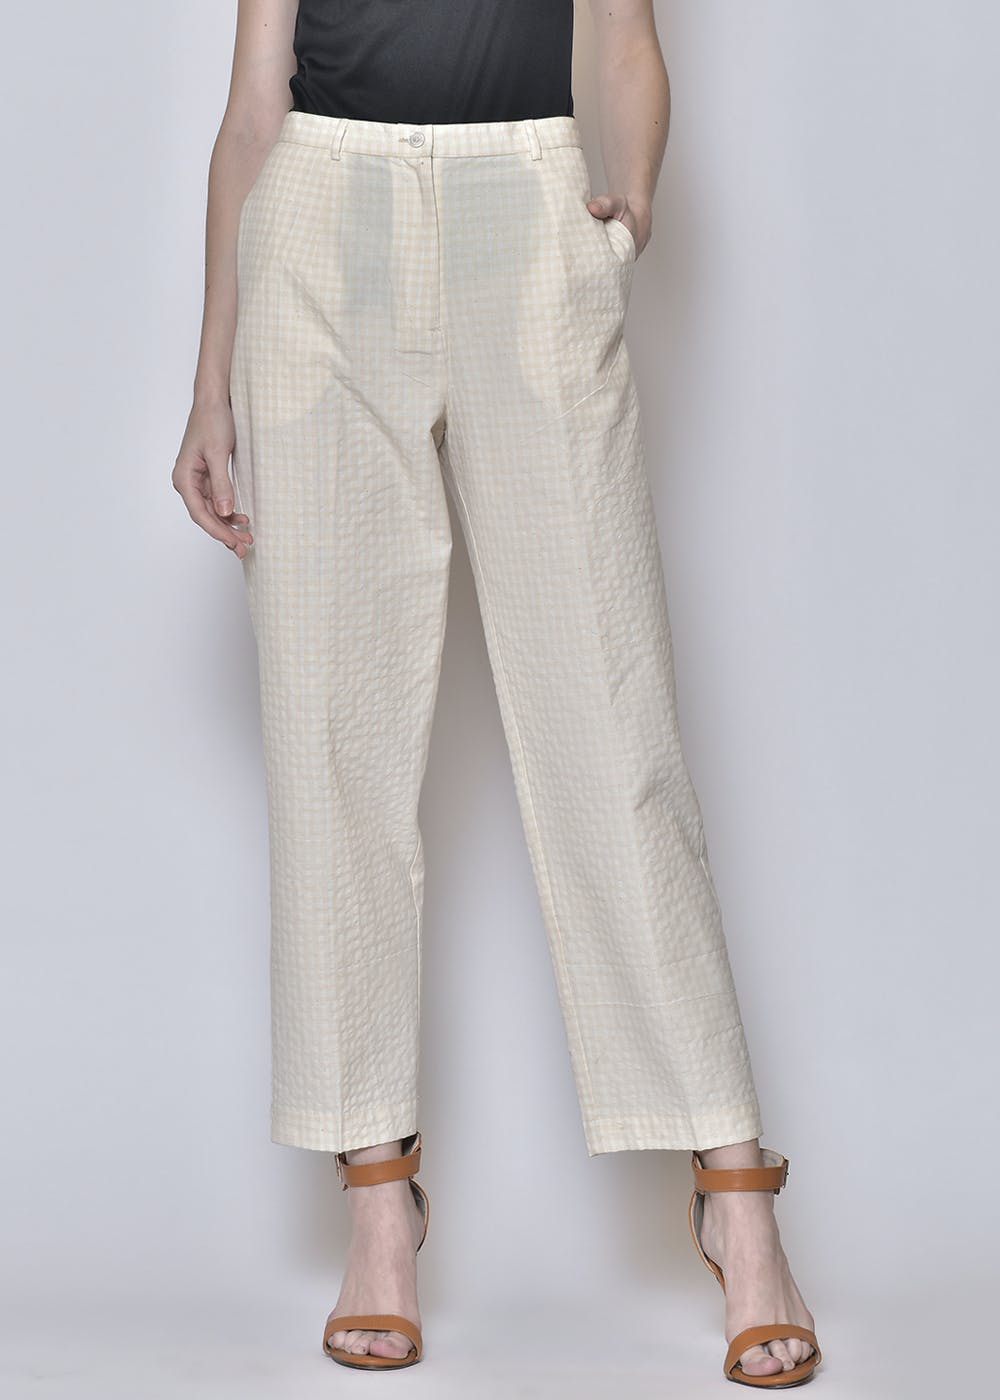 Get Self Design Beige Linen Trousers at ₹ 1499 | LBB Shop